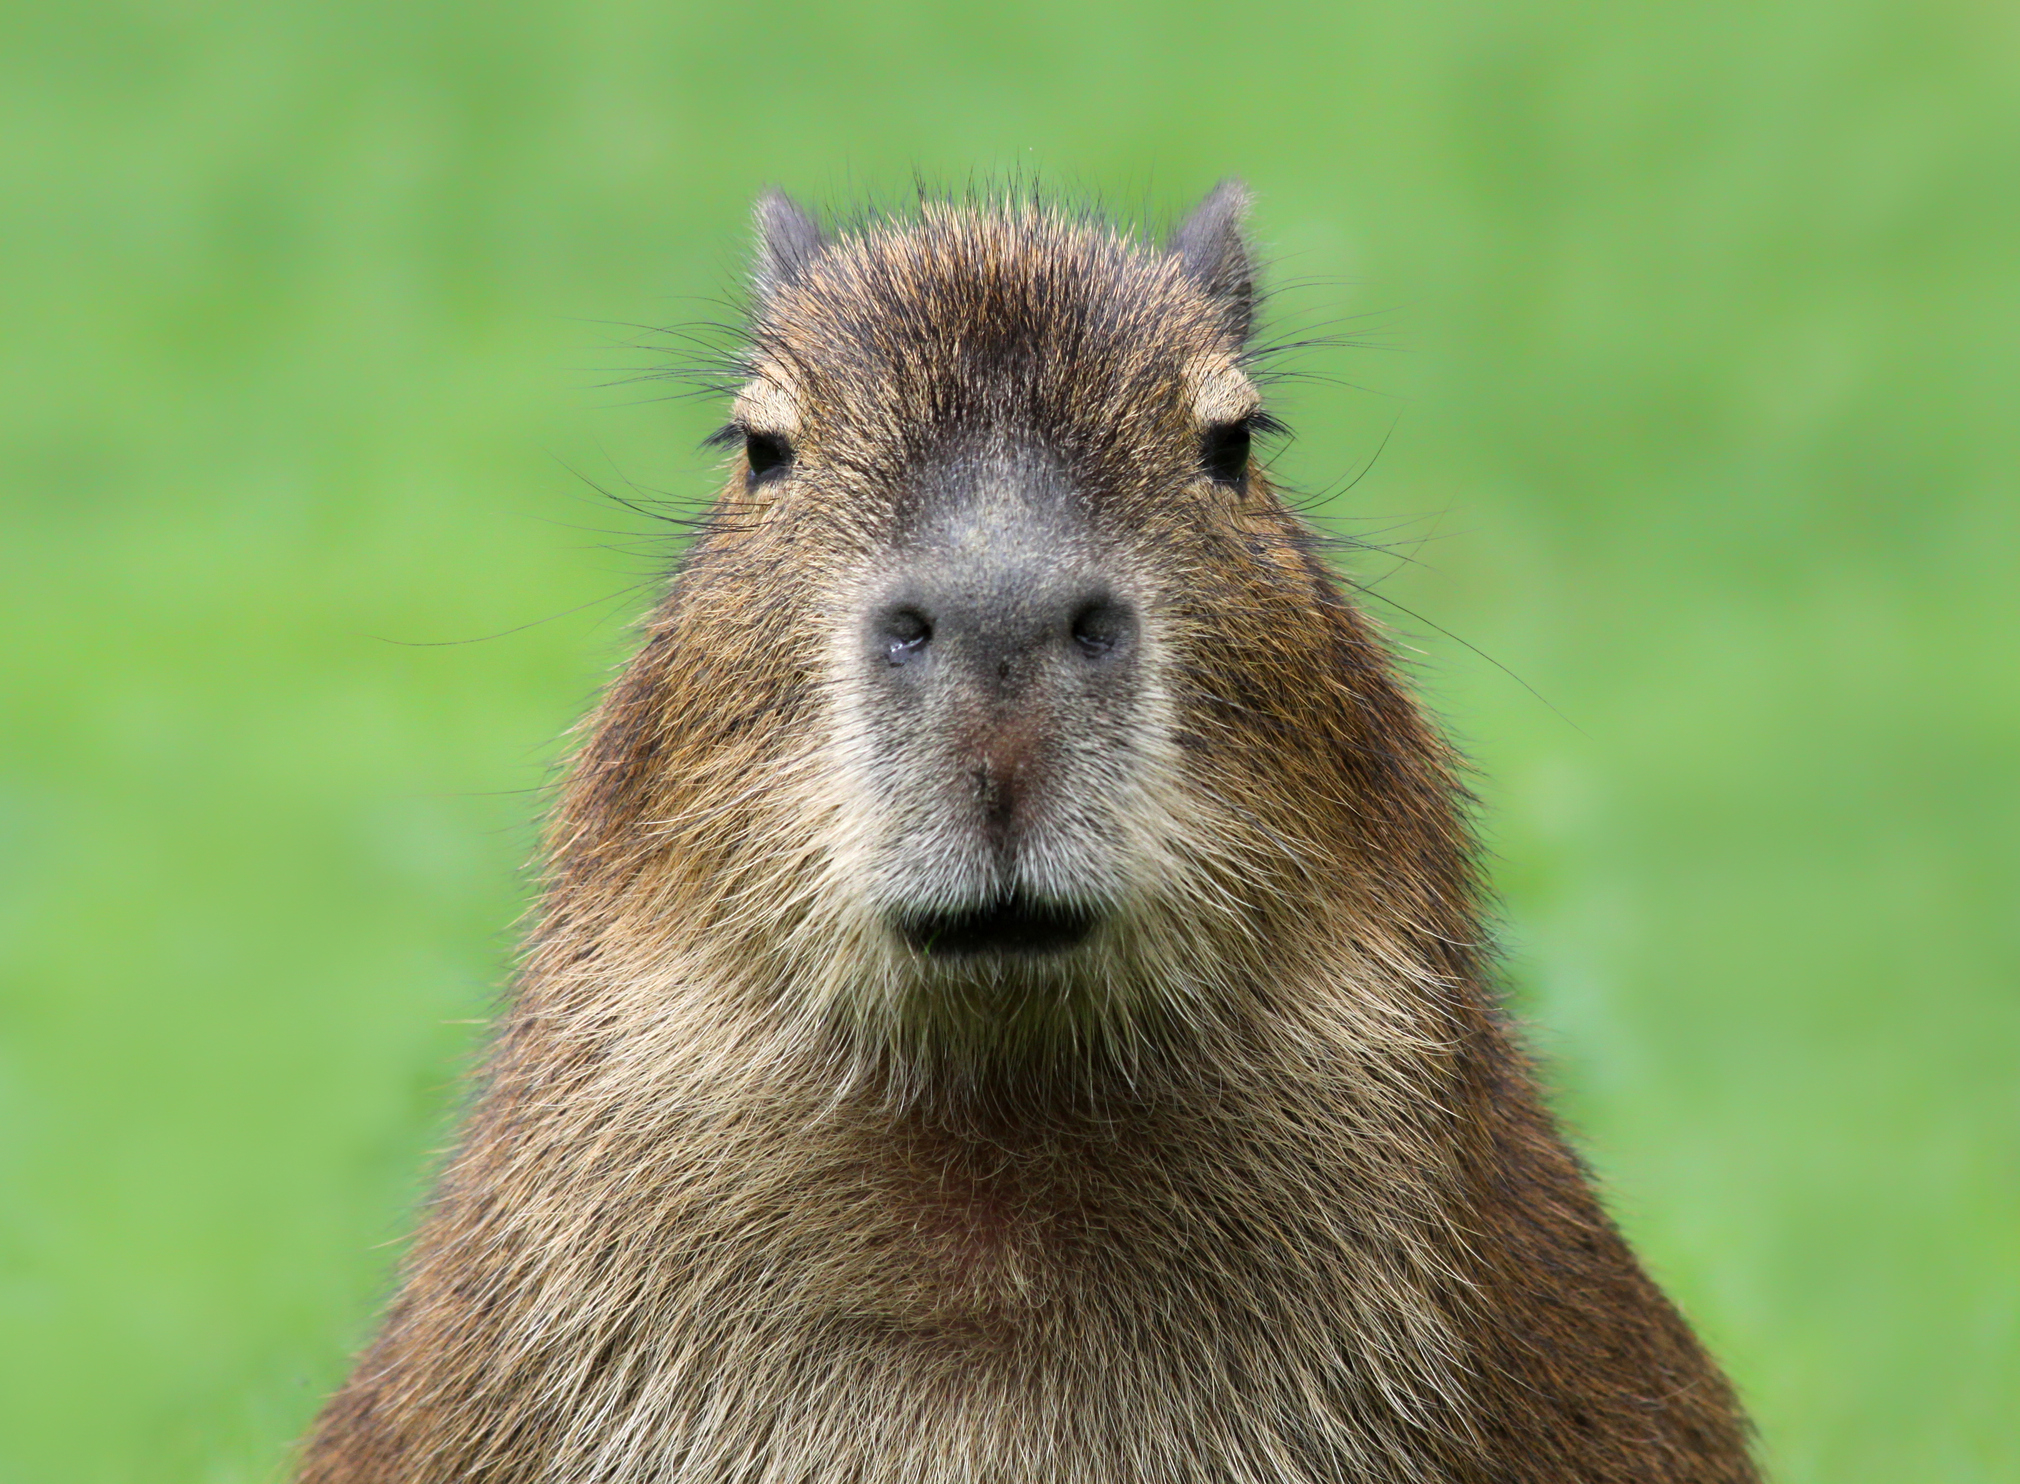 Close-up of a capybara with a slender face